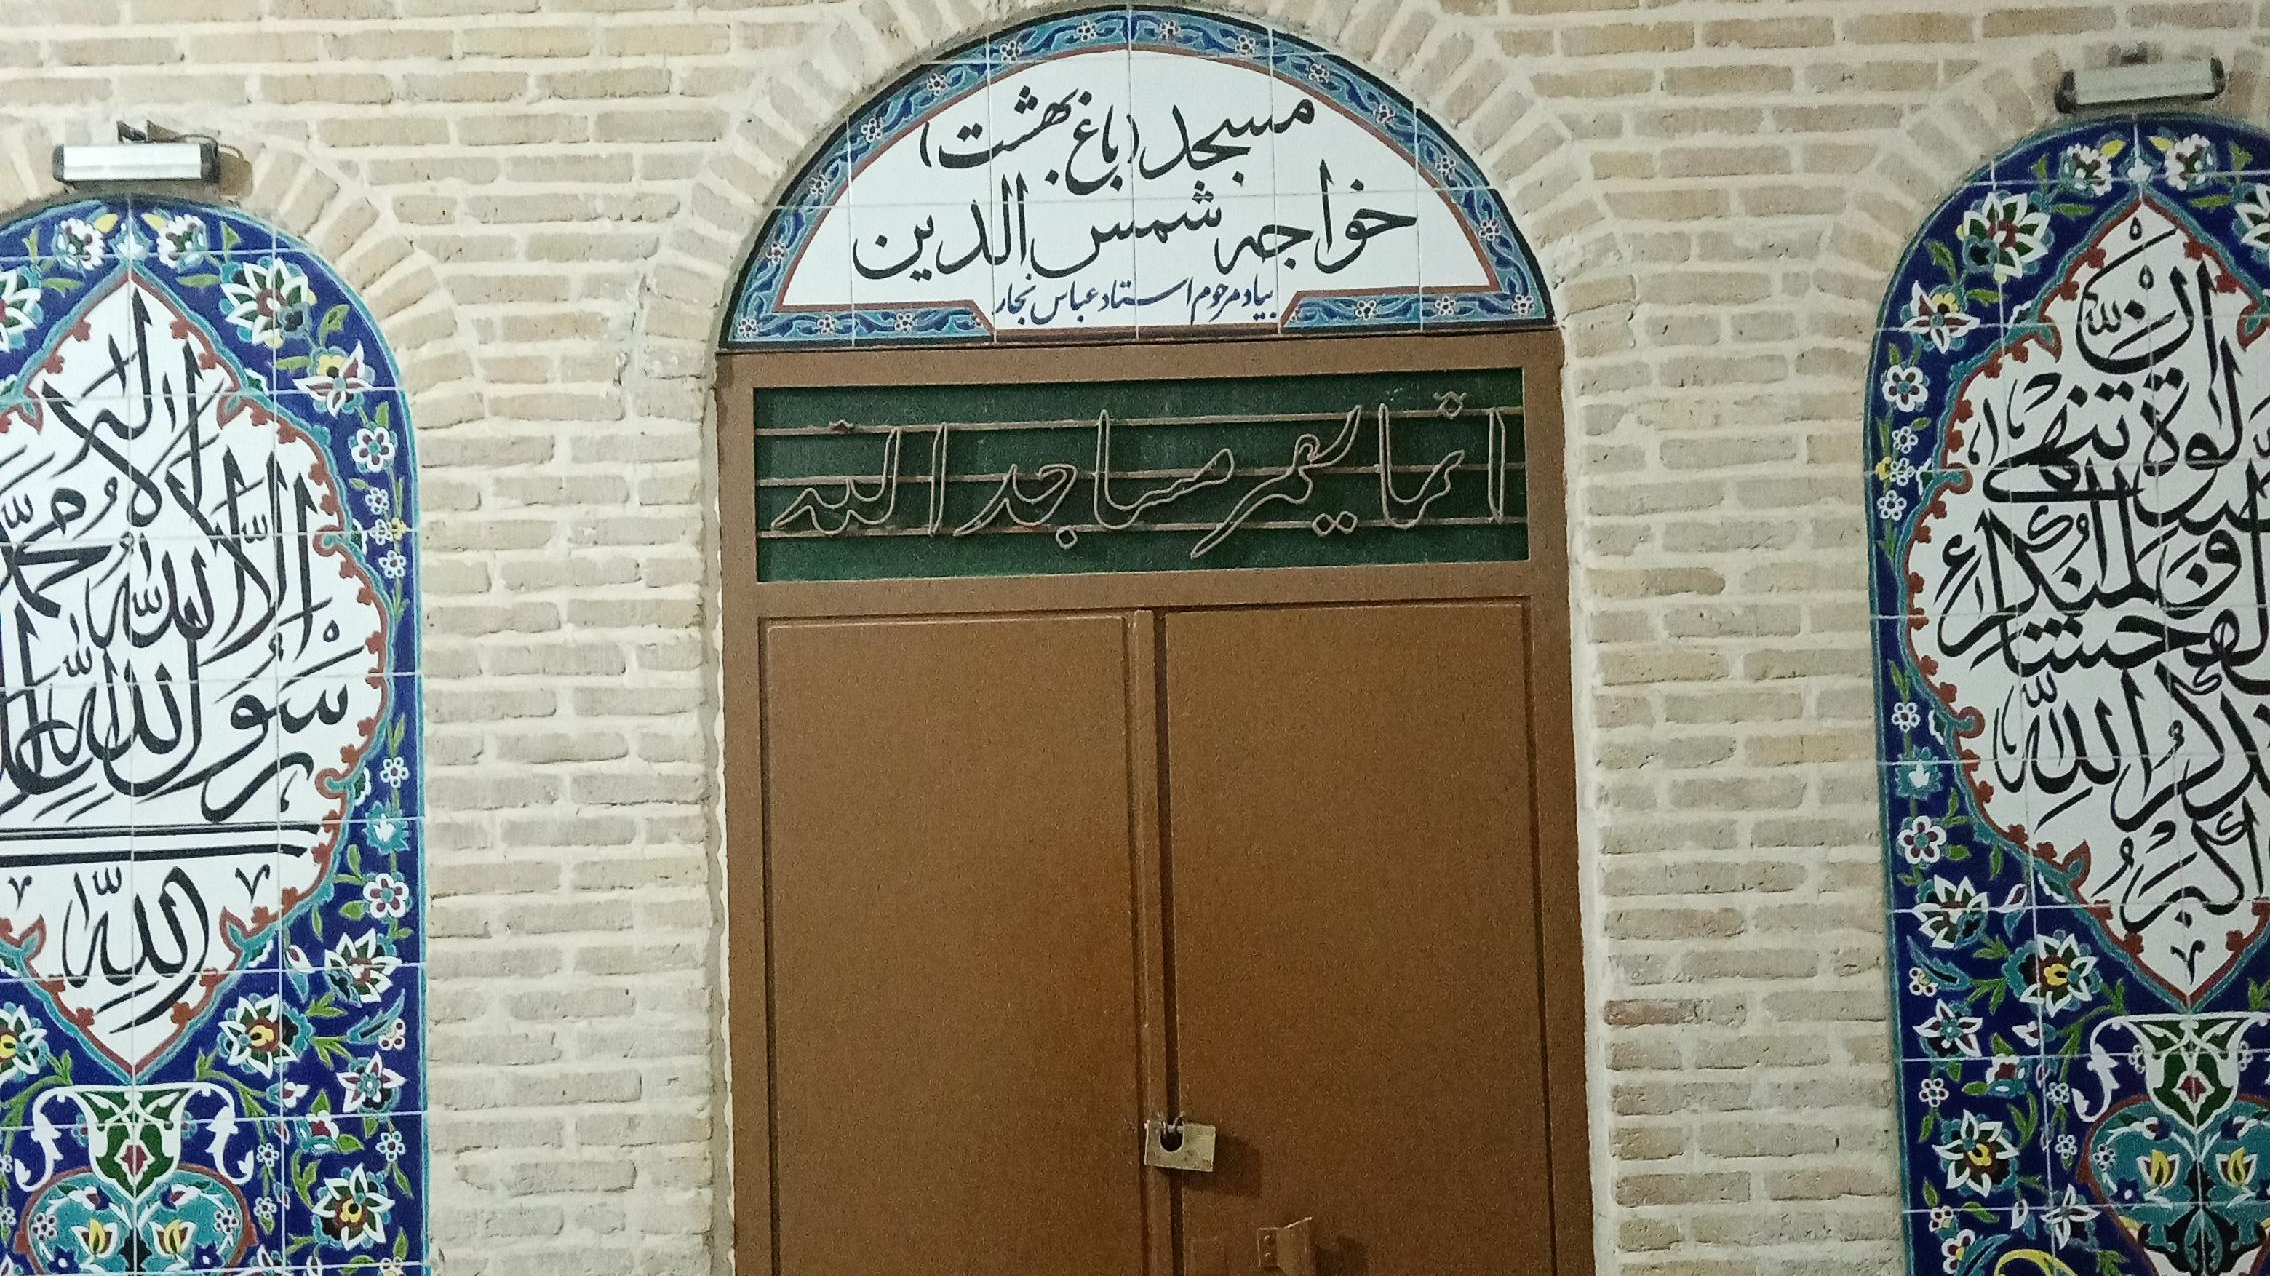 مسجدباغ بهشت (خواجه شمس الدین)